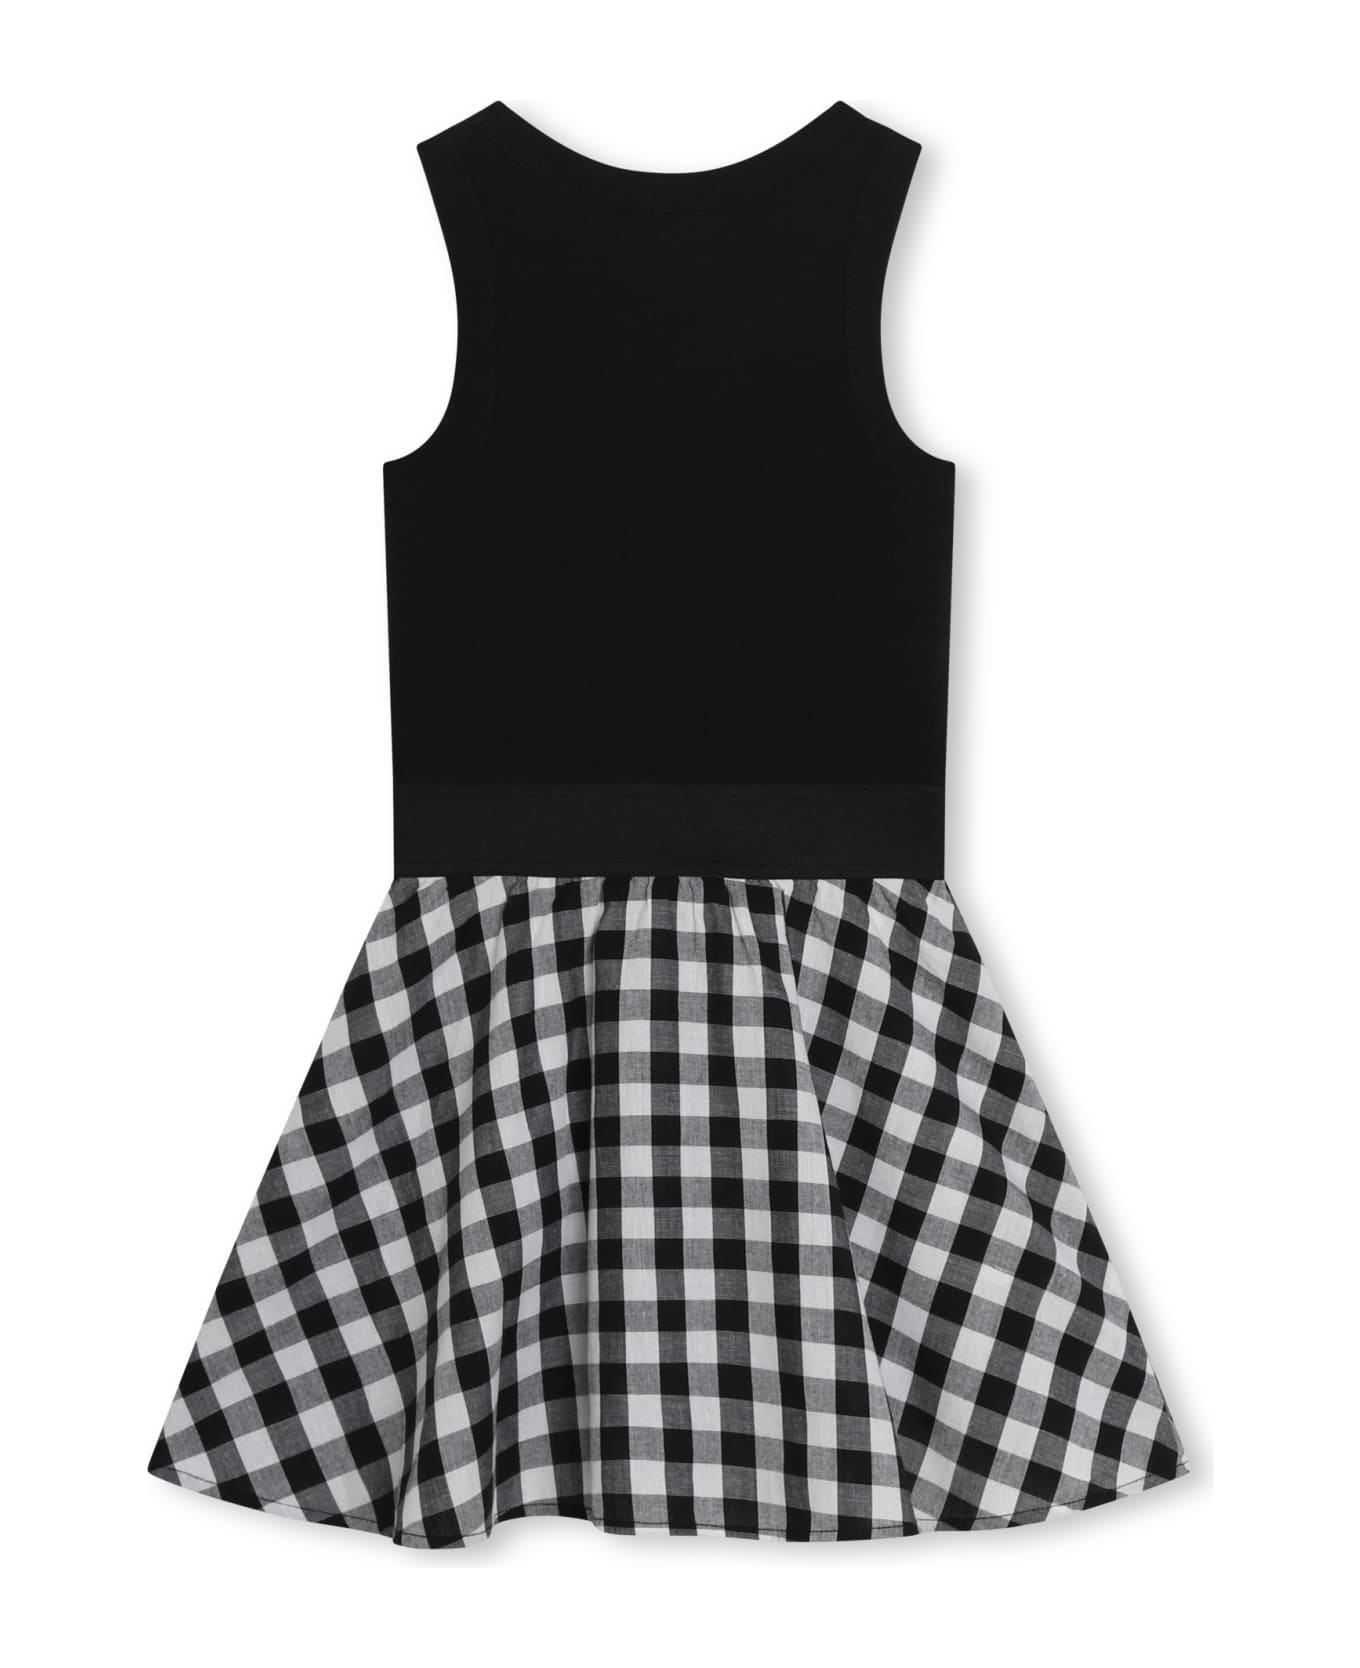 DKNY Dresses With Print - Black